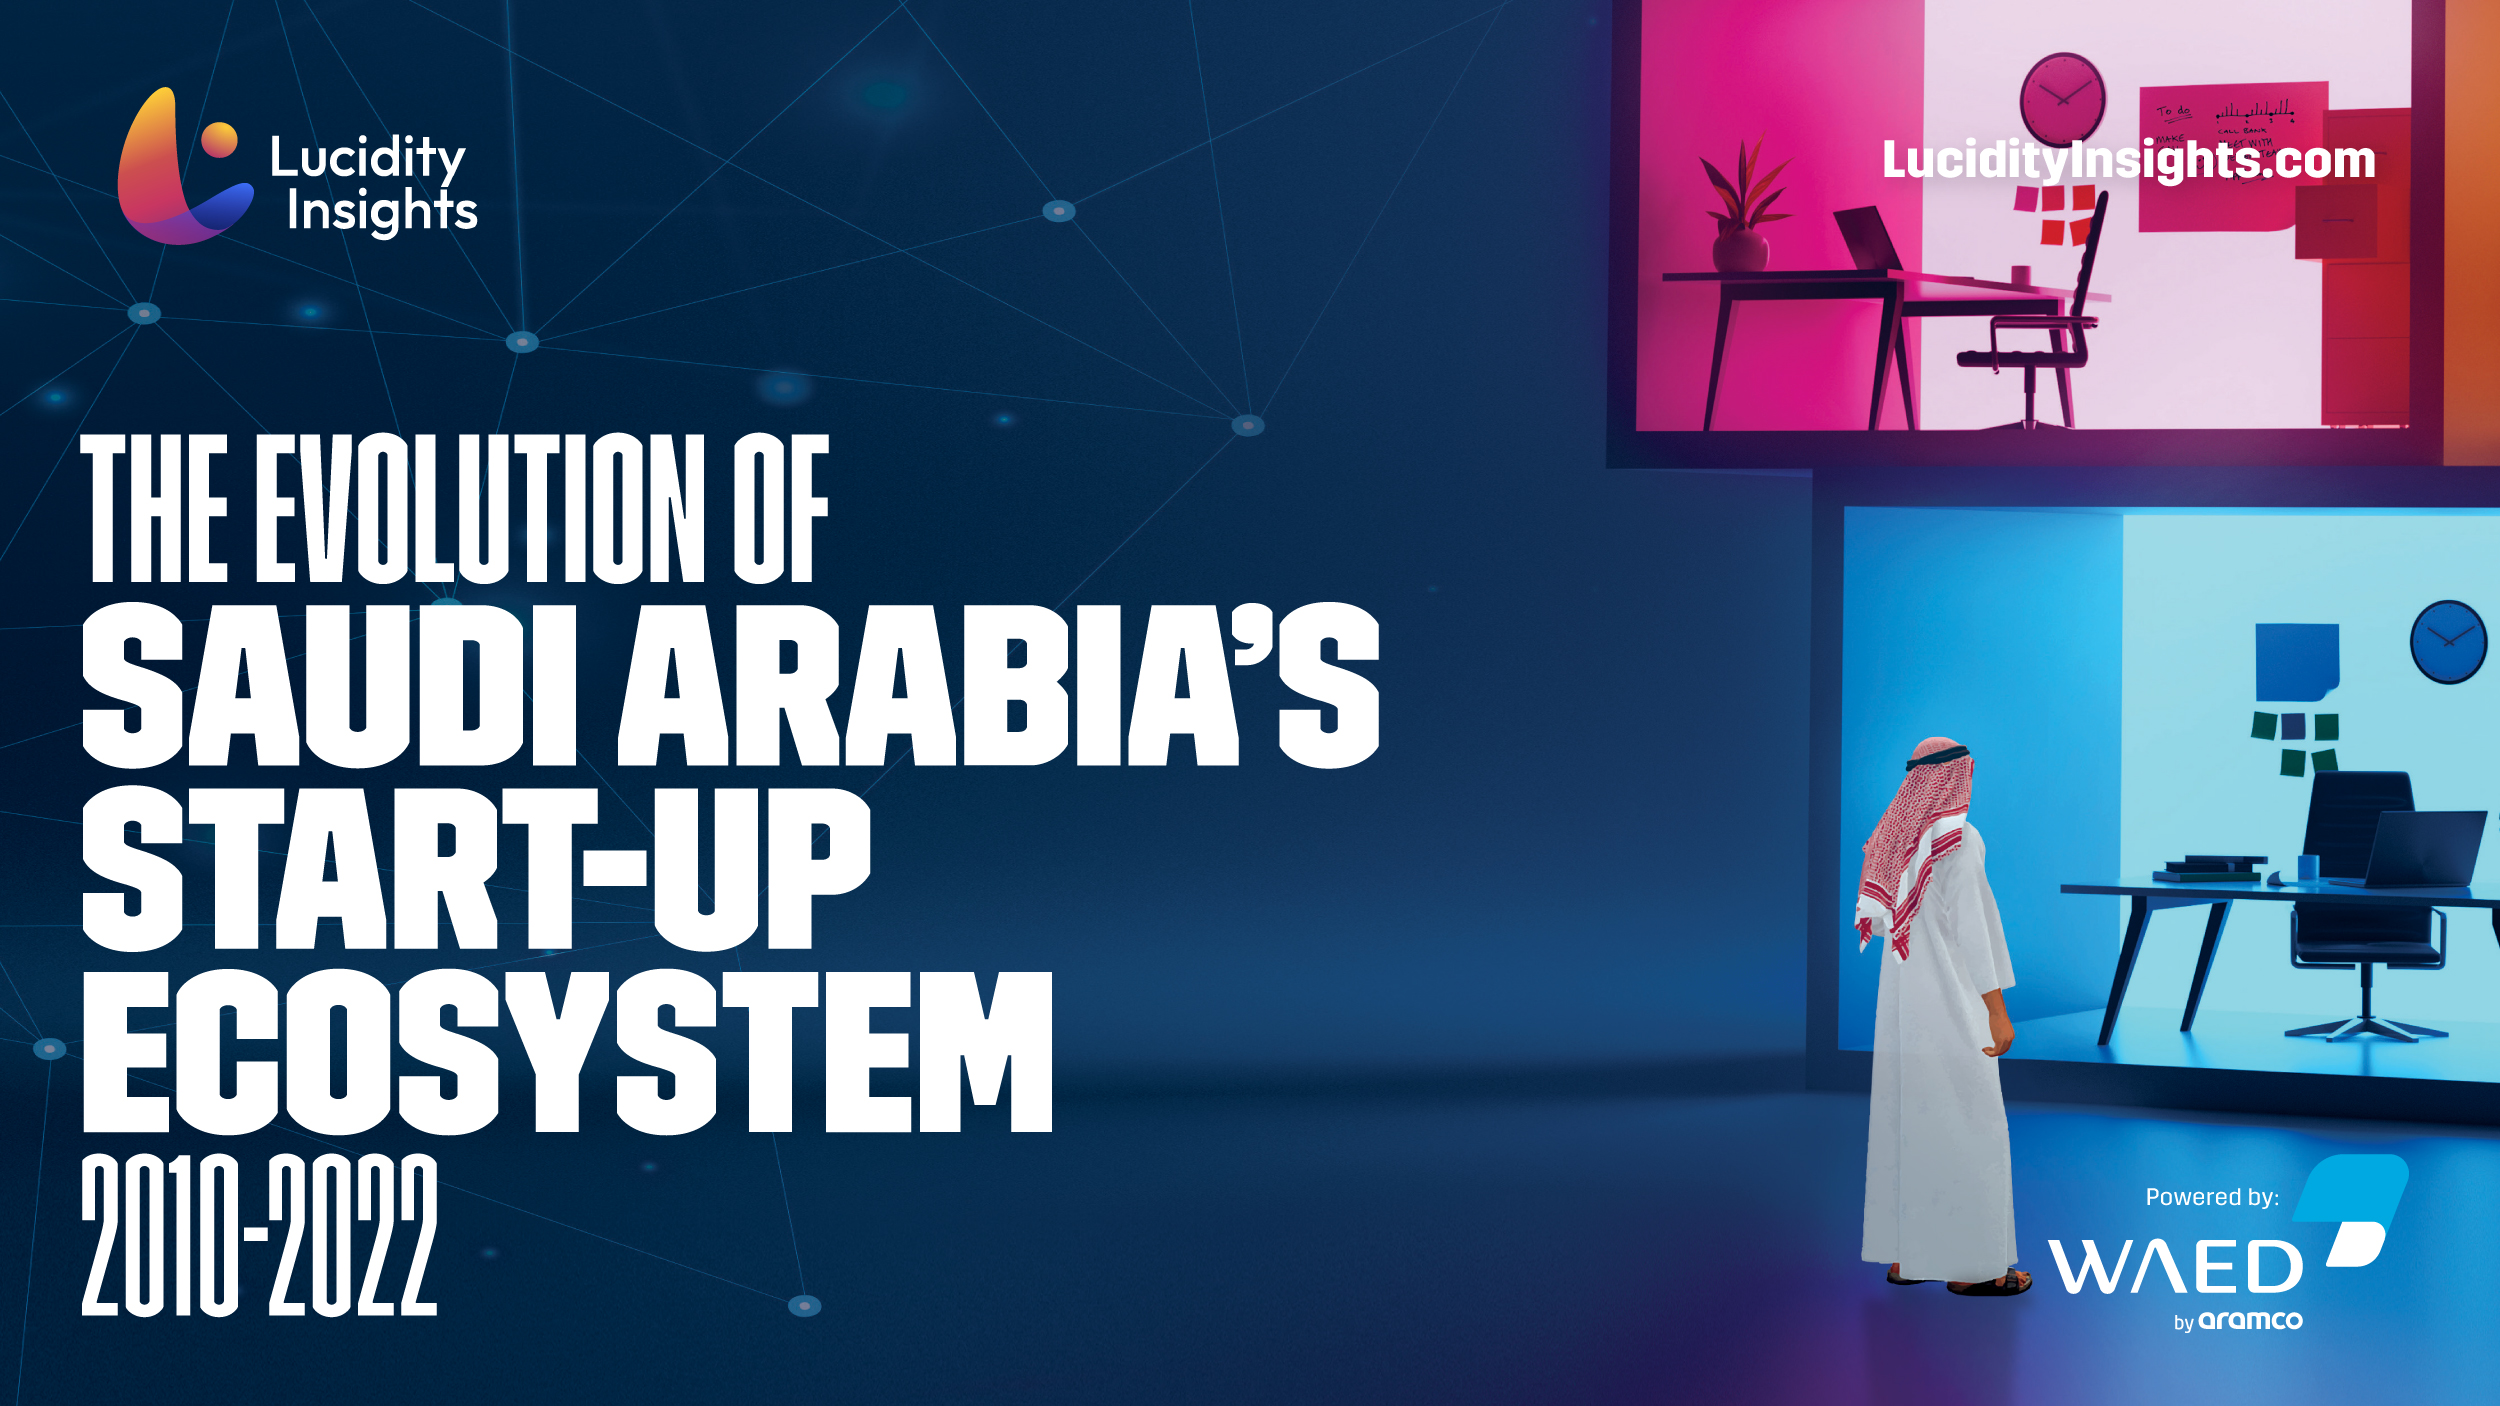 The Evolution of Saudi Arabia's Startup Ecosystem 2010-2022